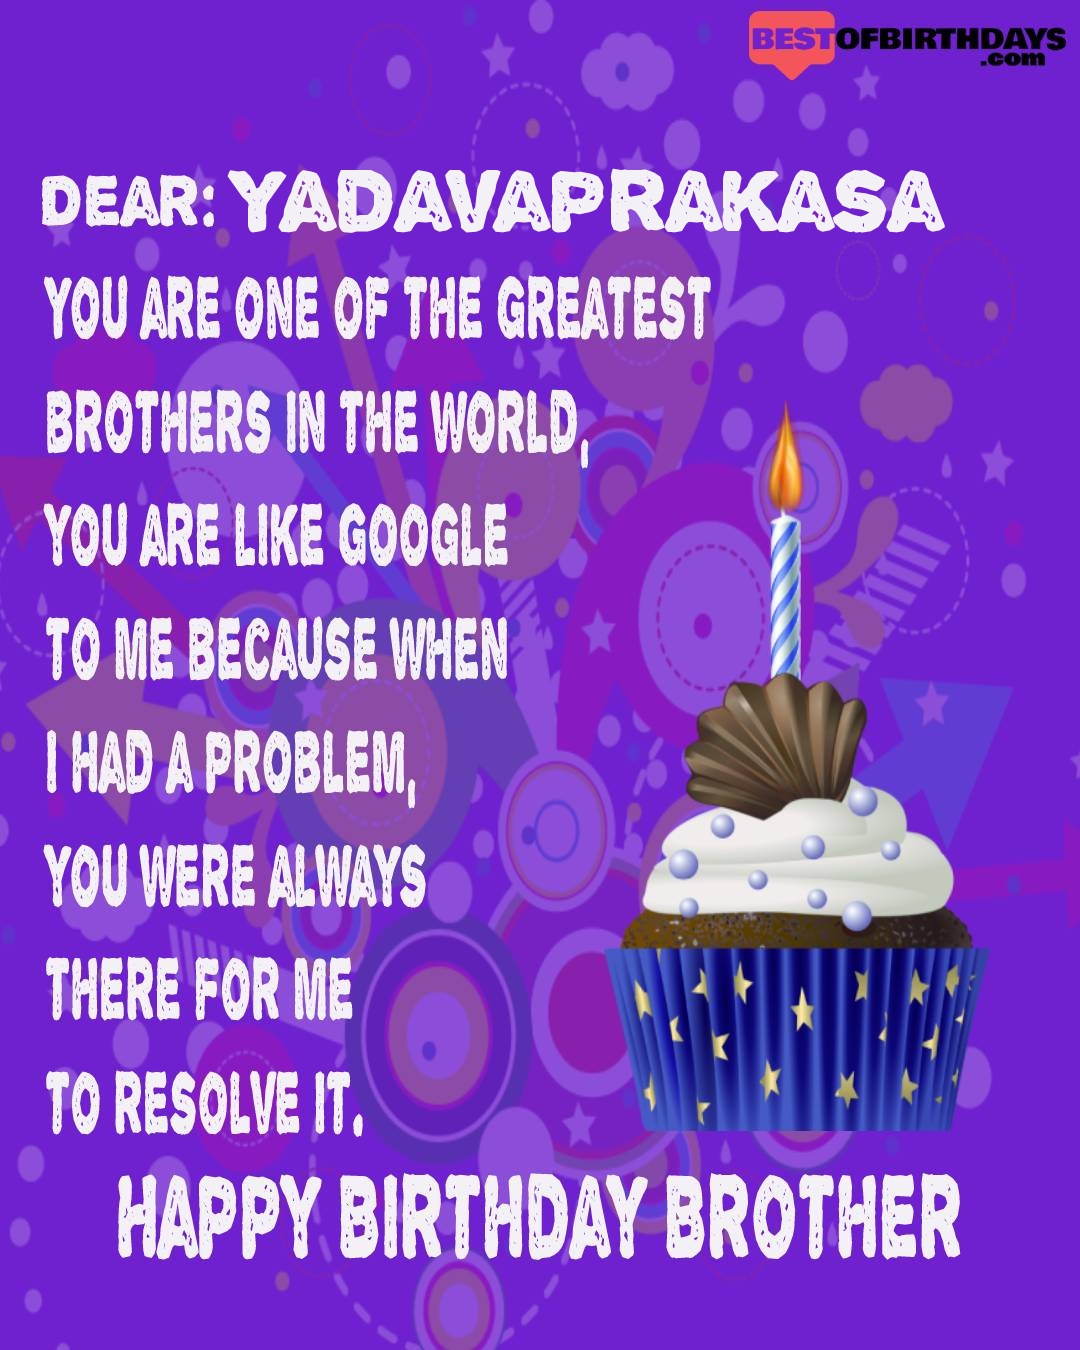 Happy birthday yadavaprakasa bhai brother bro